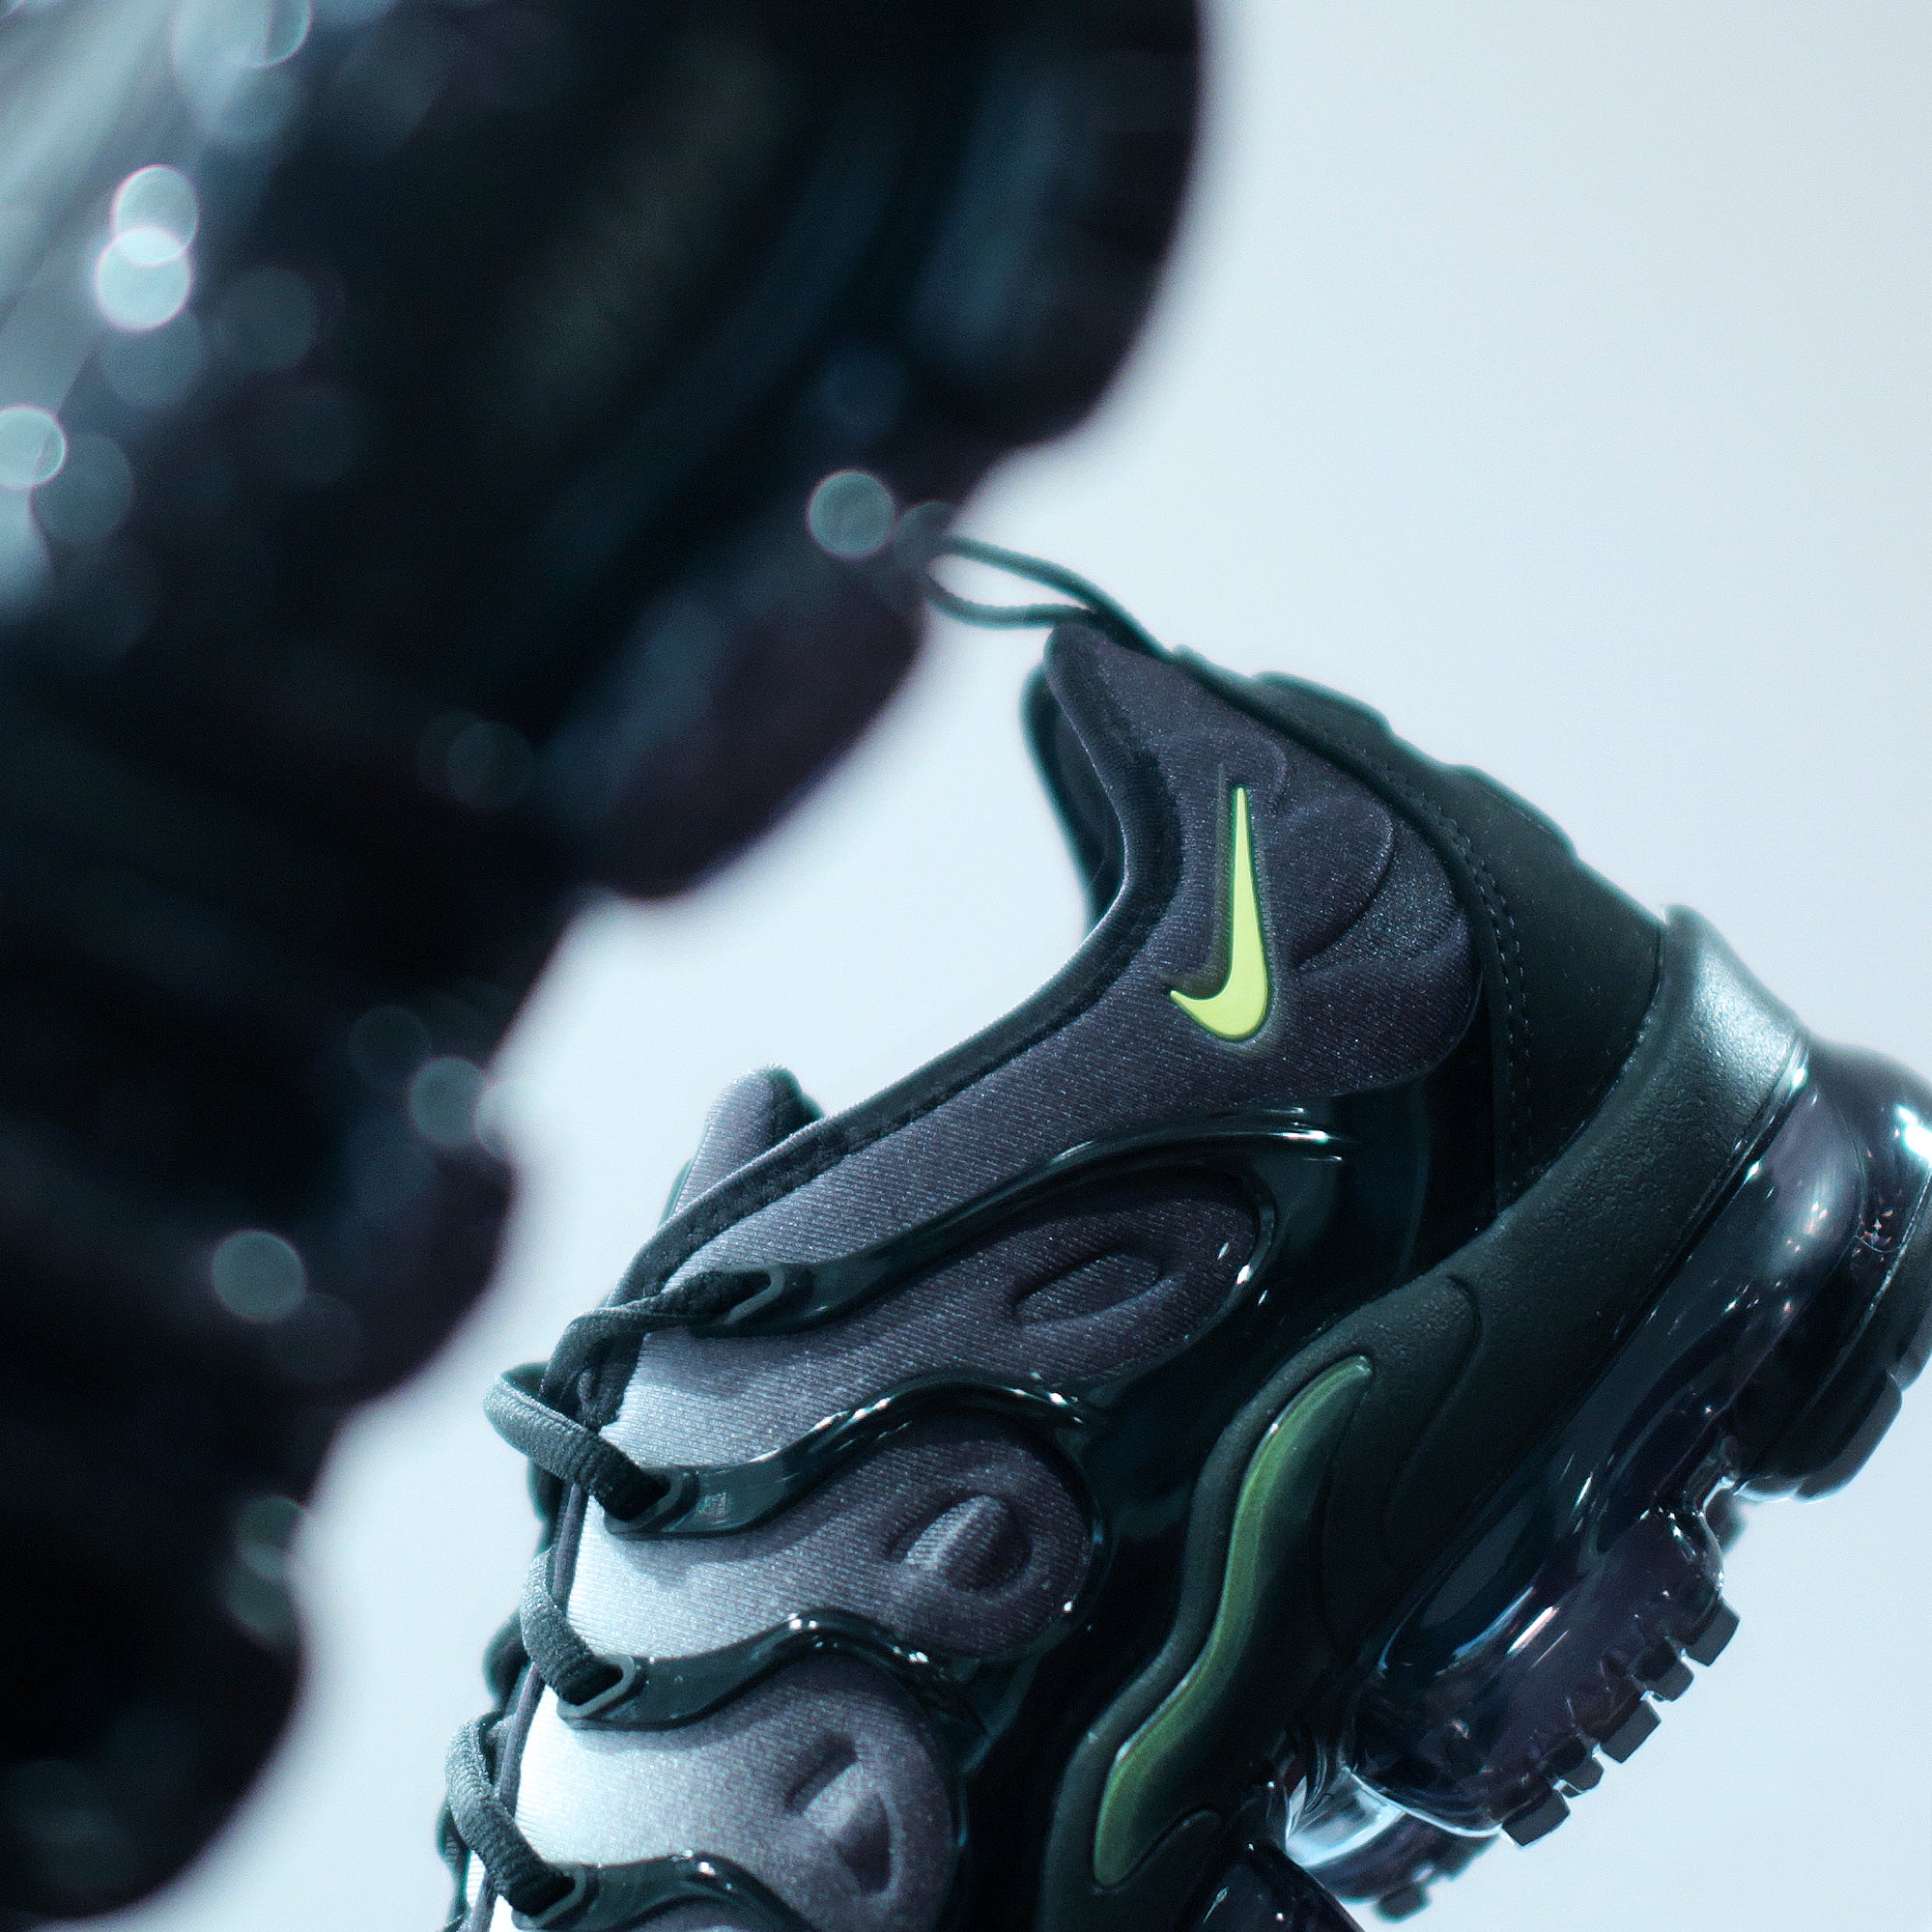 Nike Vapormax Plus - Black/Volt - Releasing 4/6 card image